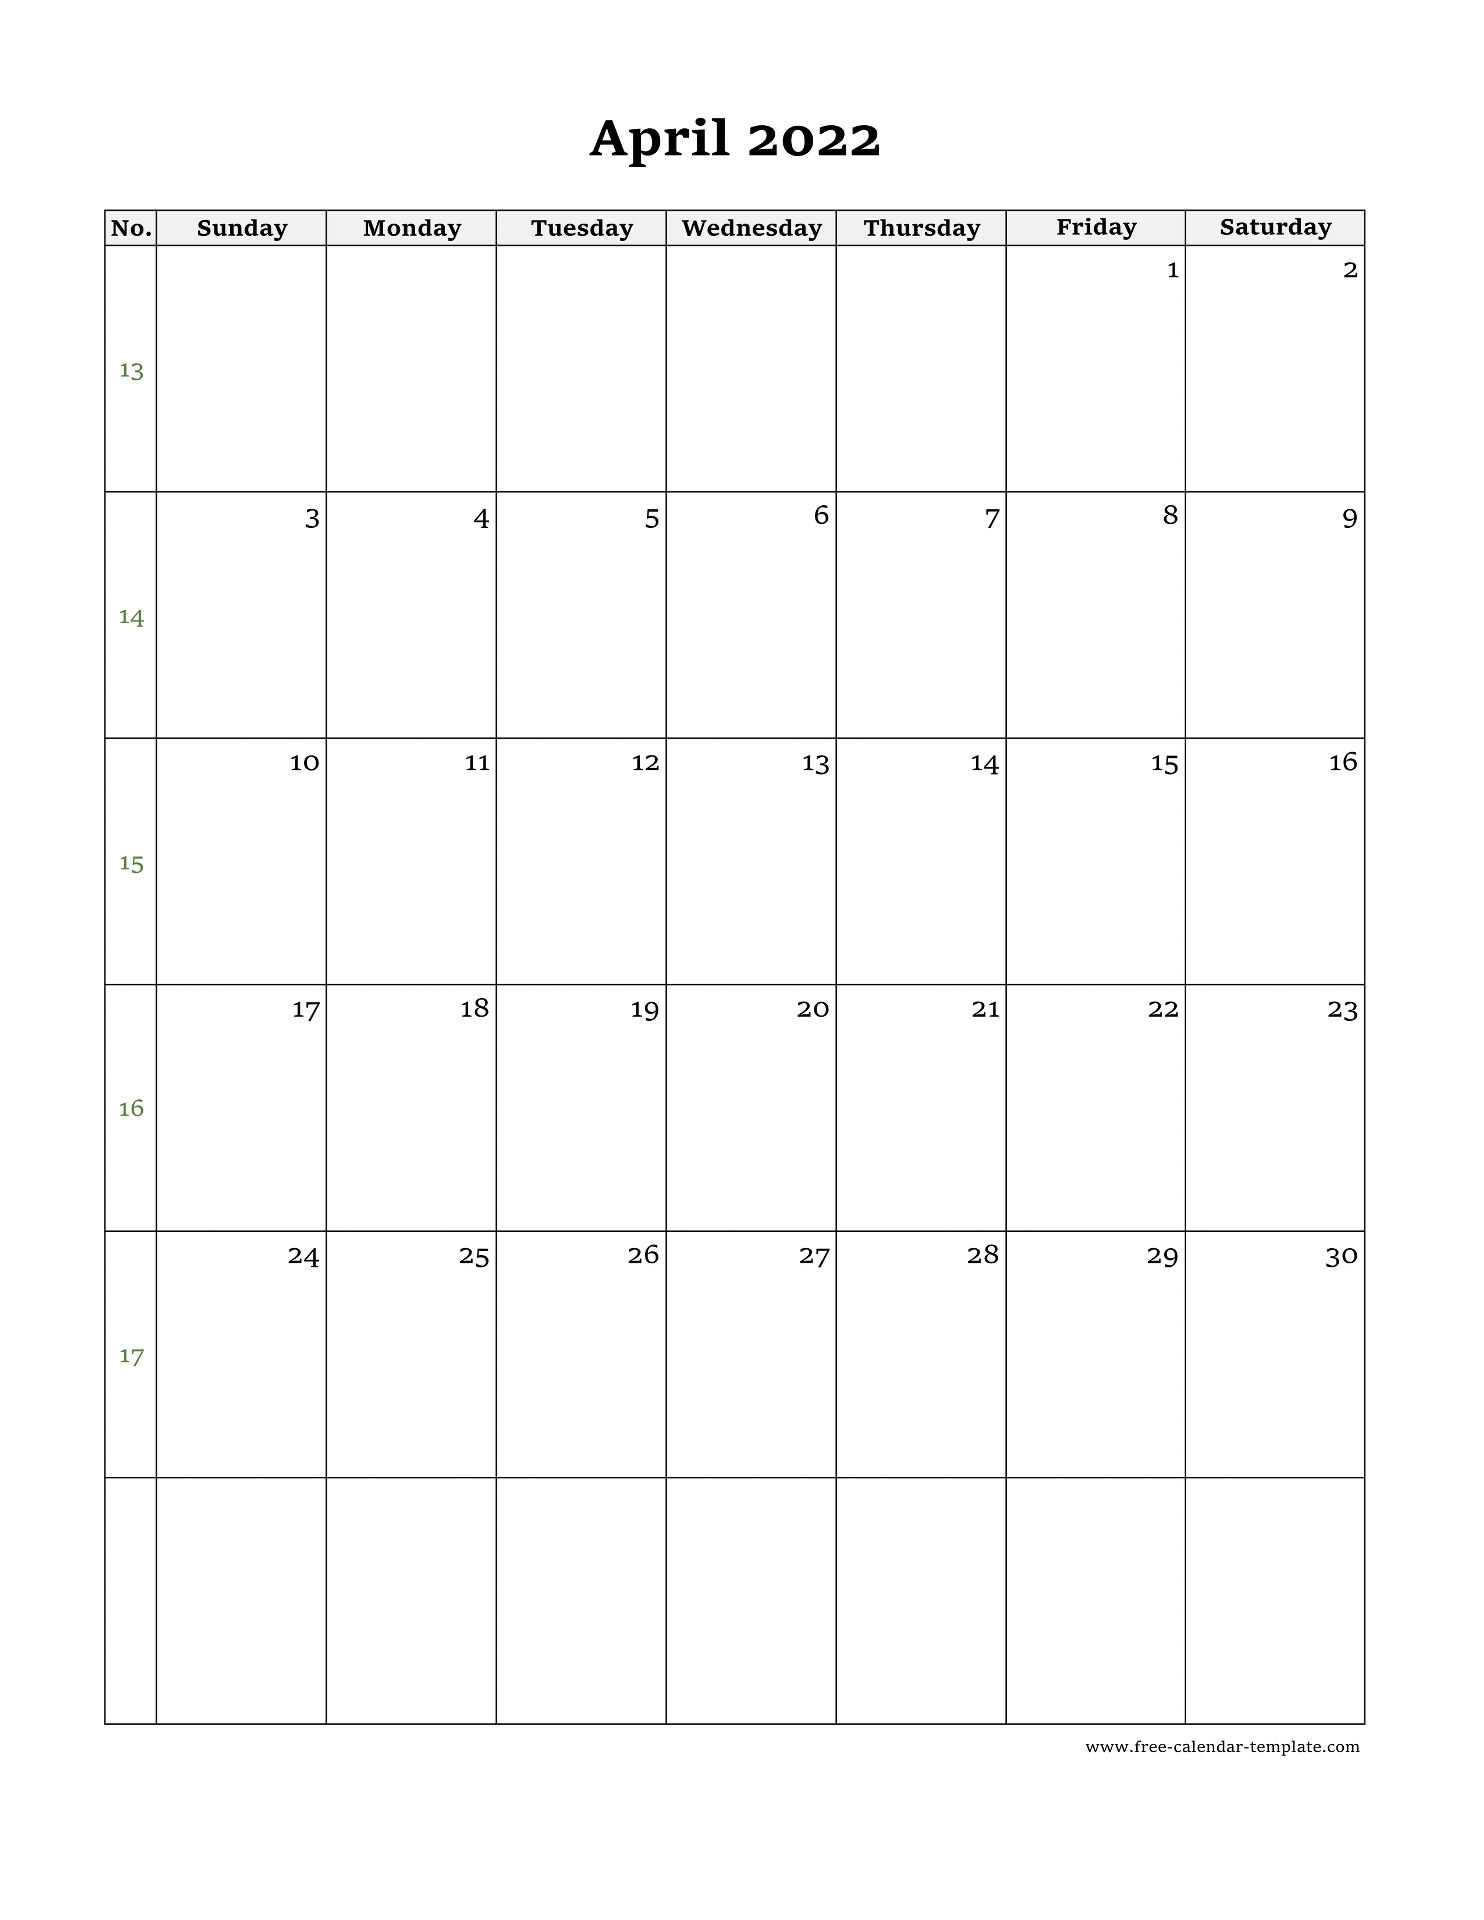 April Calendar 2022 Simple Design With Large Box On Each